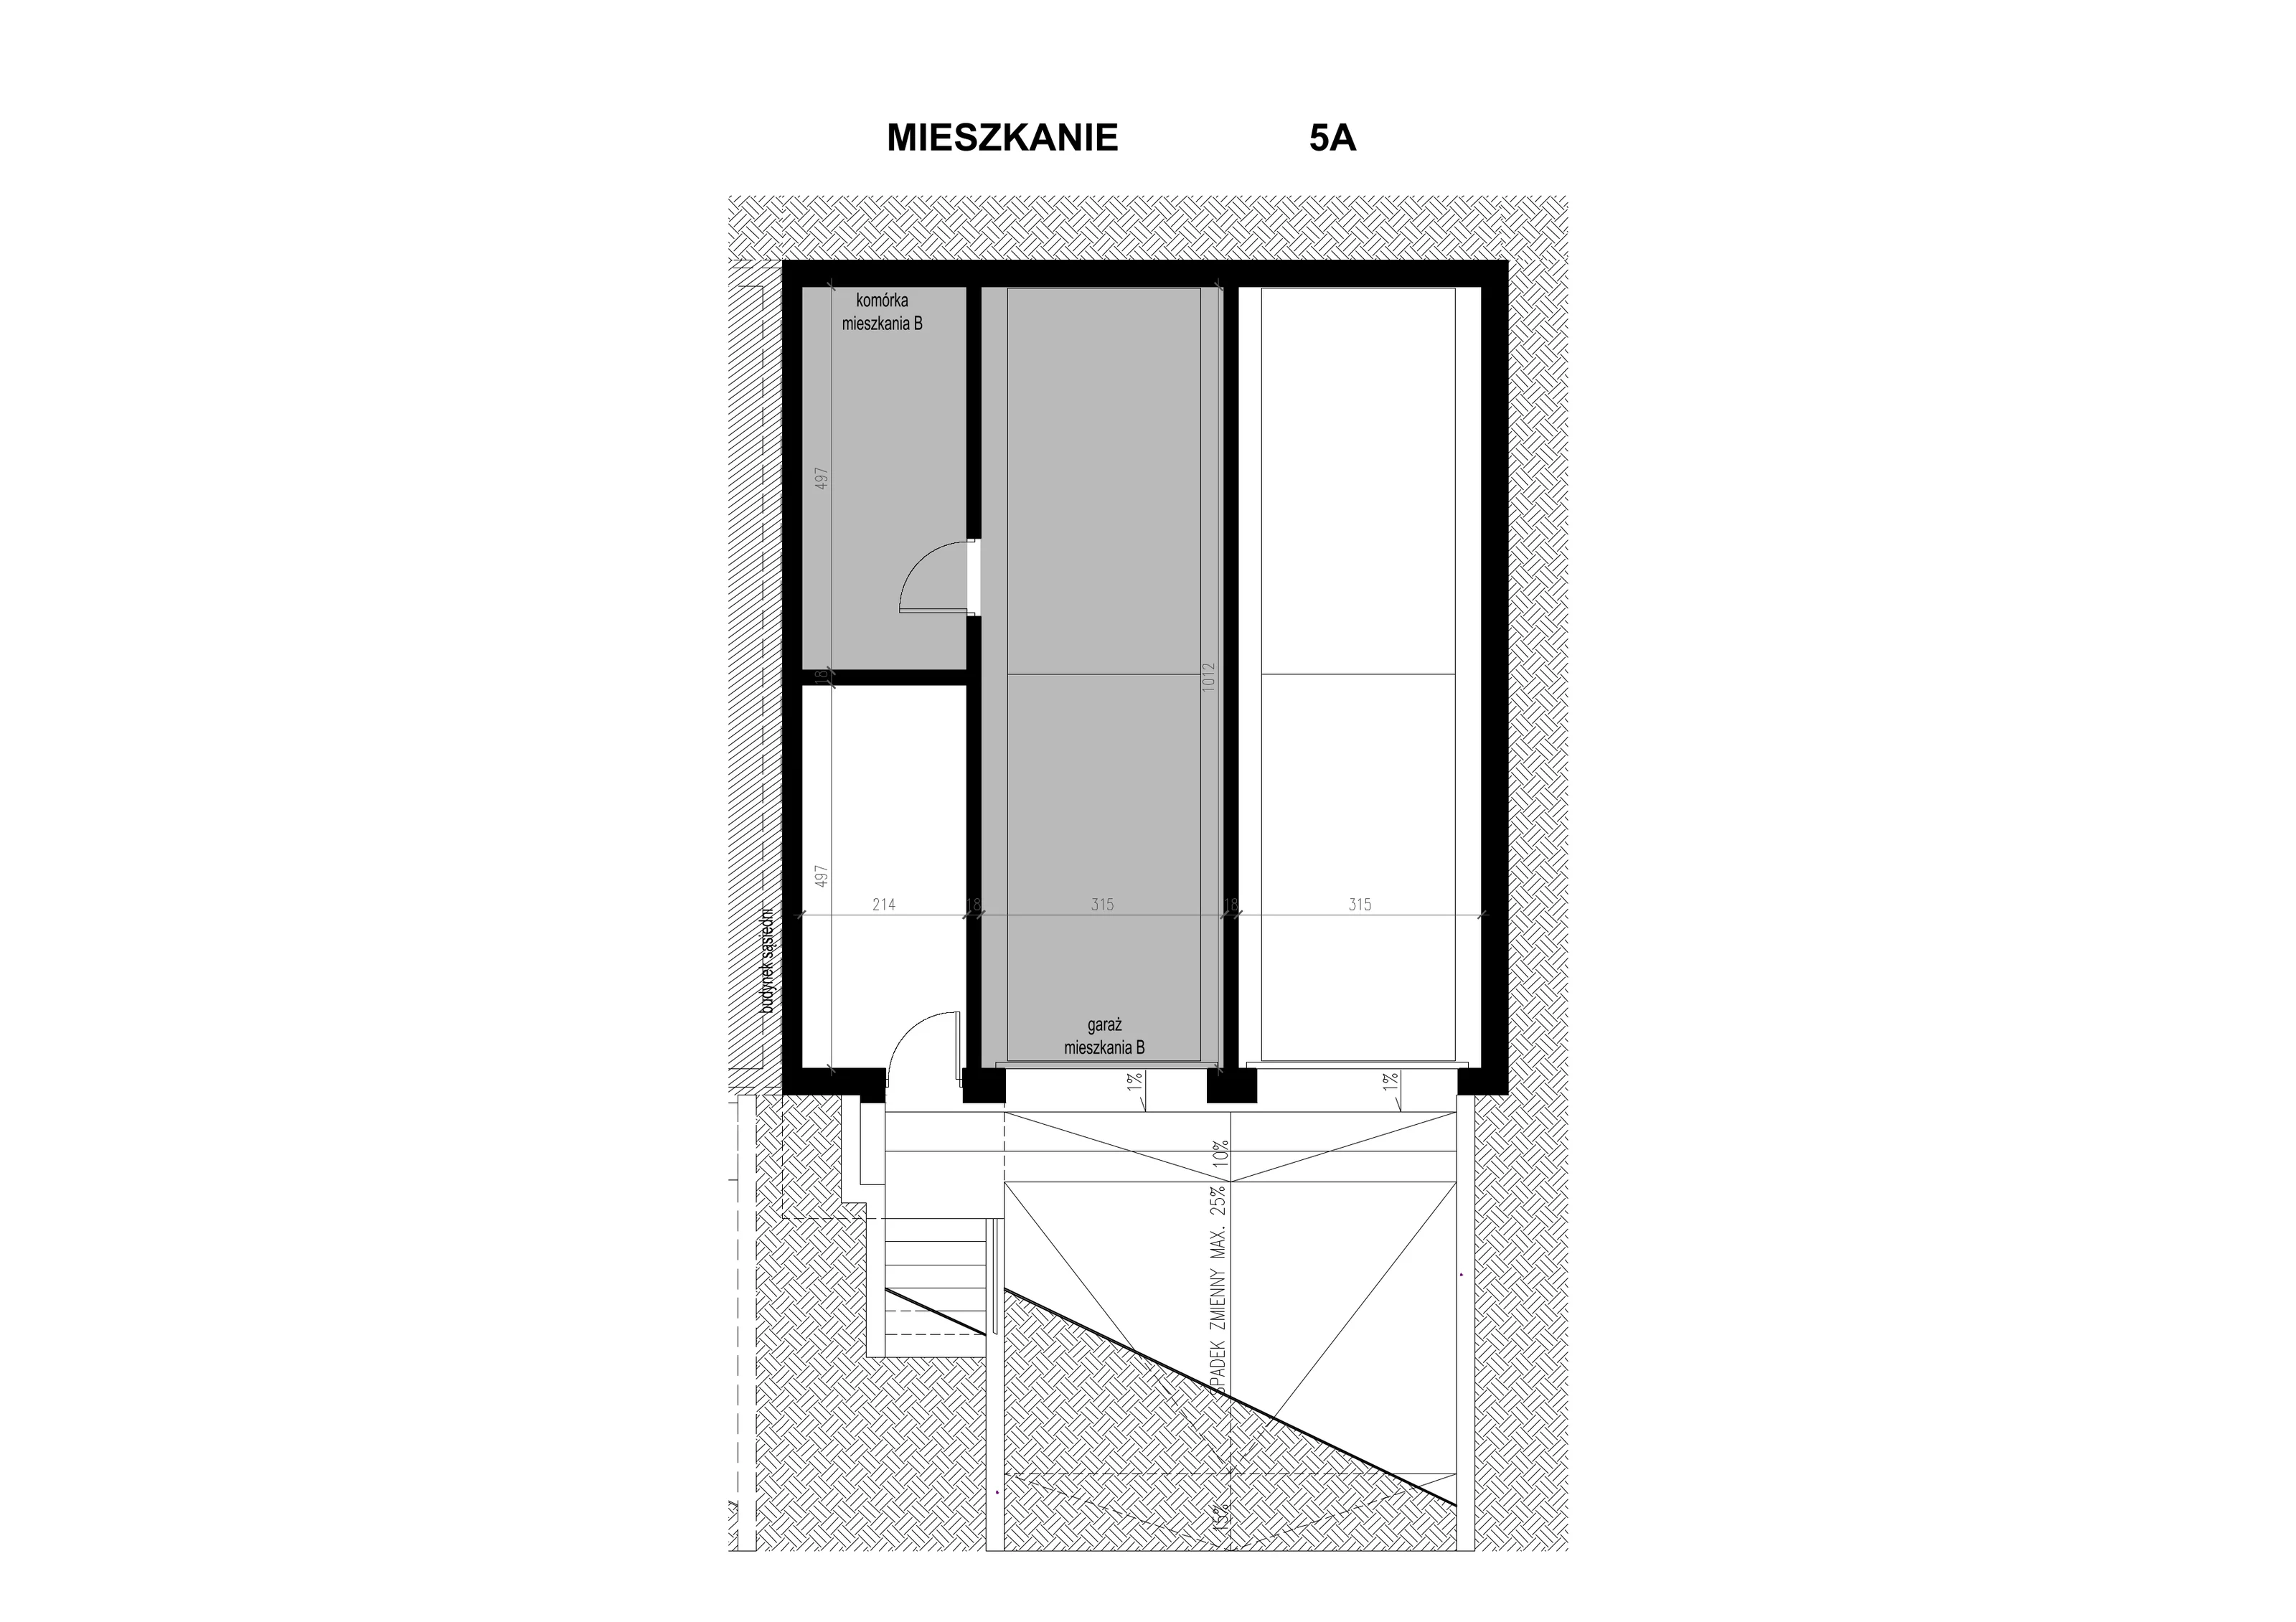 Apartament 80,15 m², parter, oferta nr 1.5A, Osiedle BO, Wrocław, Kowale, ul. Bociana